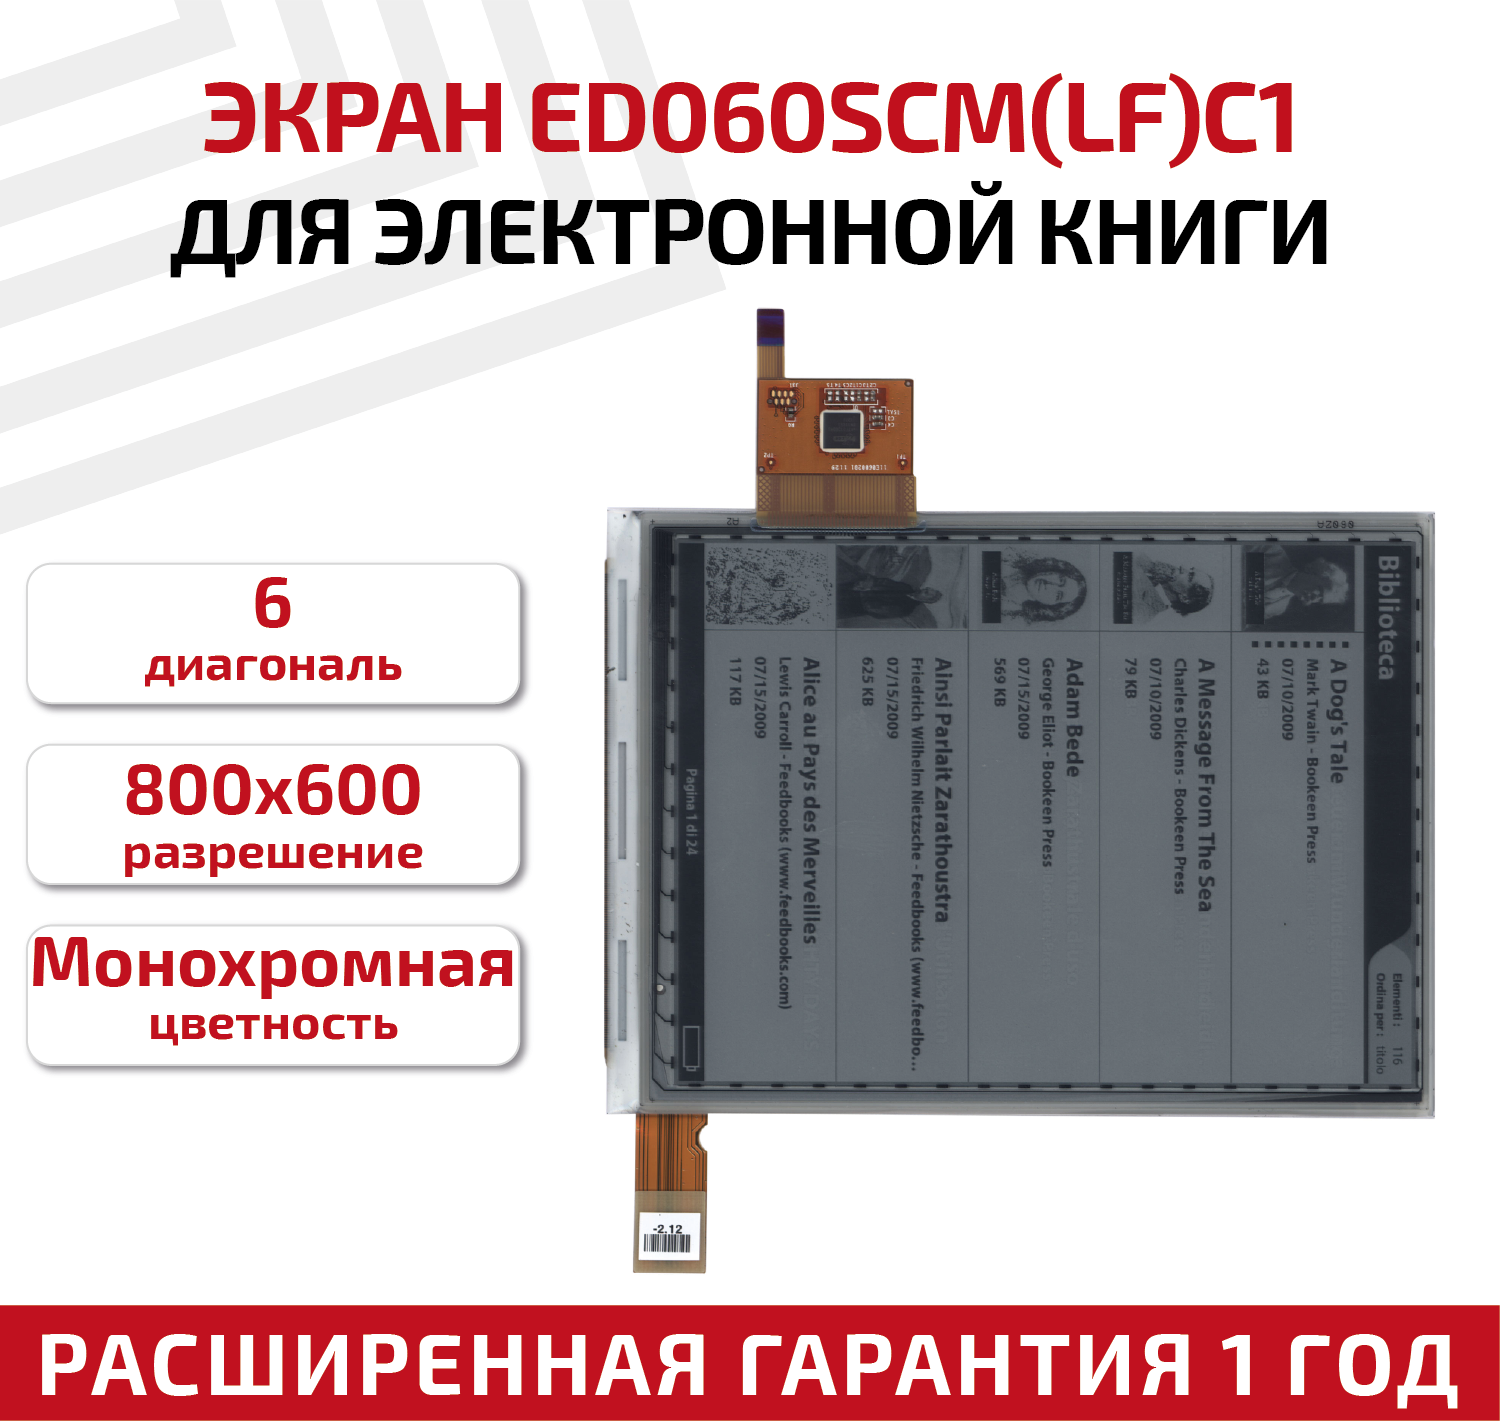 Экран для электронной книги e-ink 6" PVI ED060SCM(LF)C1 + touchscreen 800x600 (SVGA)